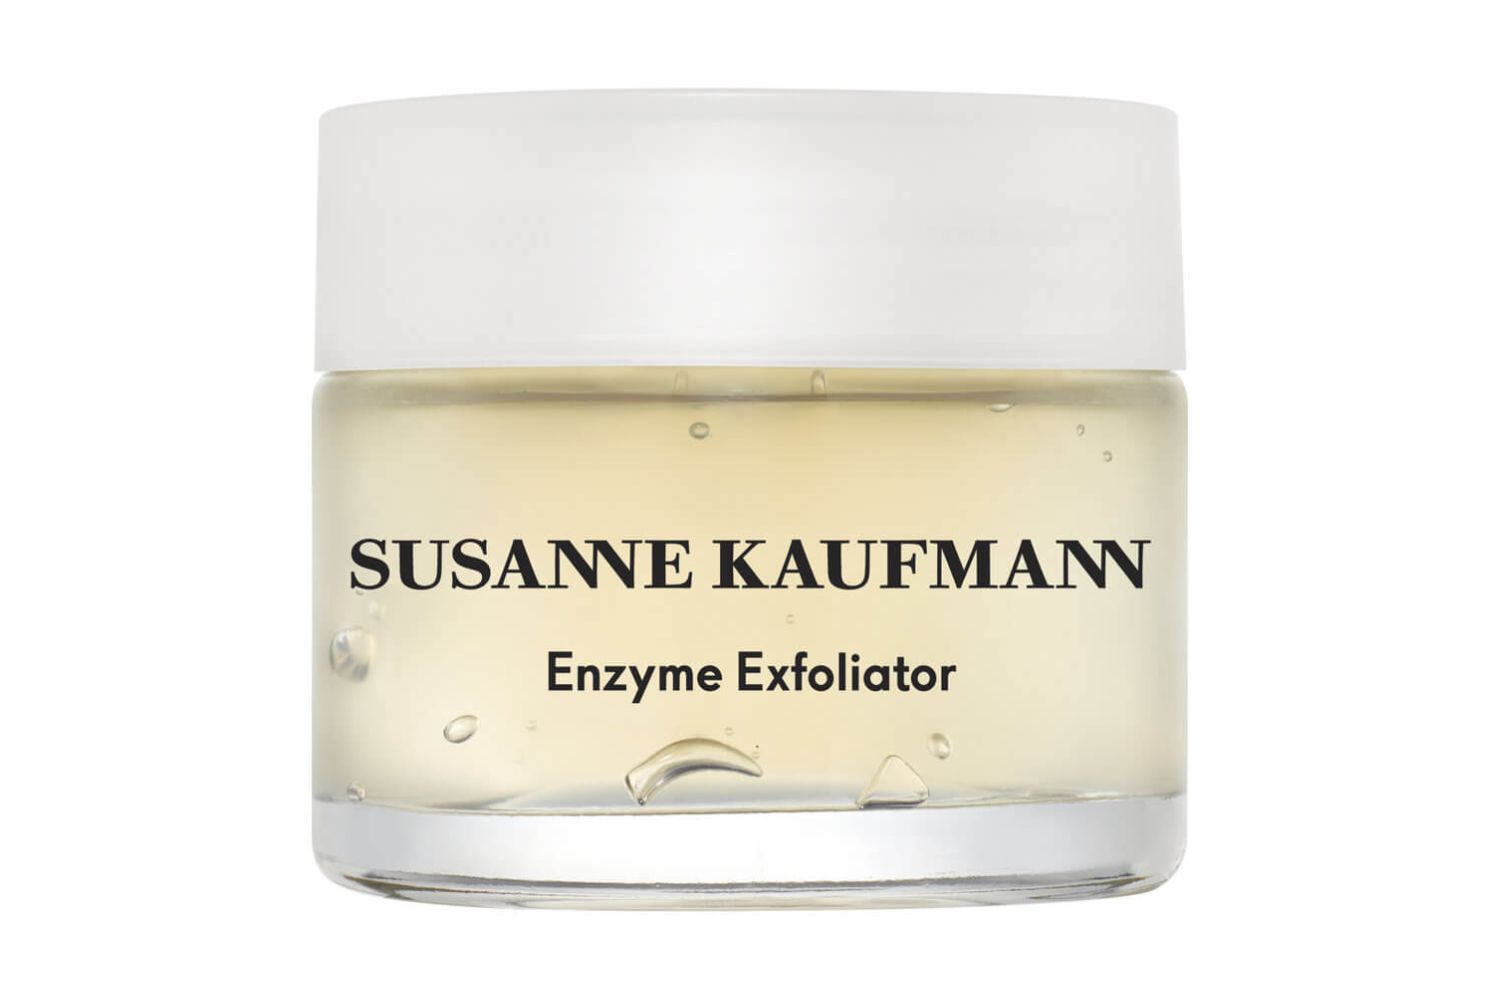 Susanne Kaufmann Enzyme Exfoliator, $101